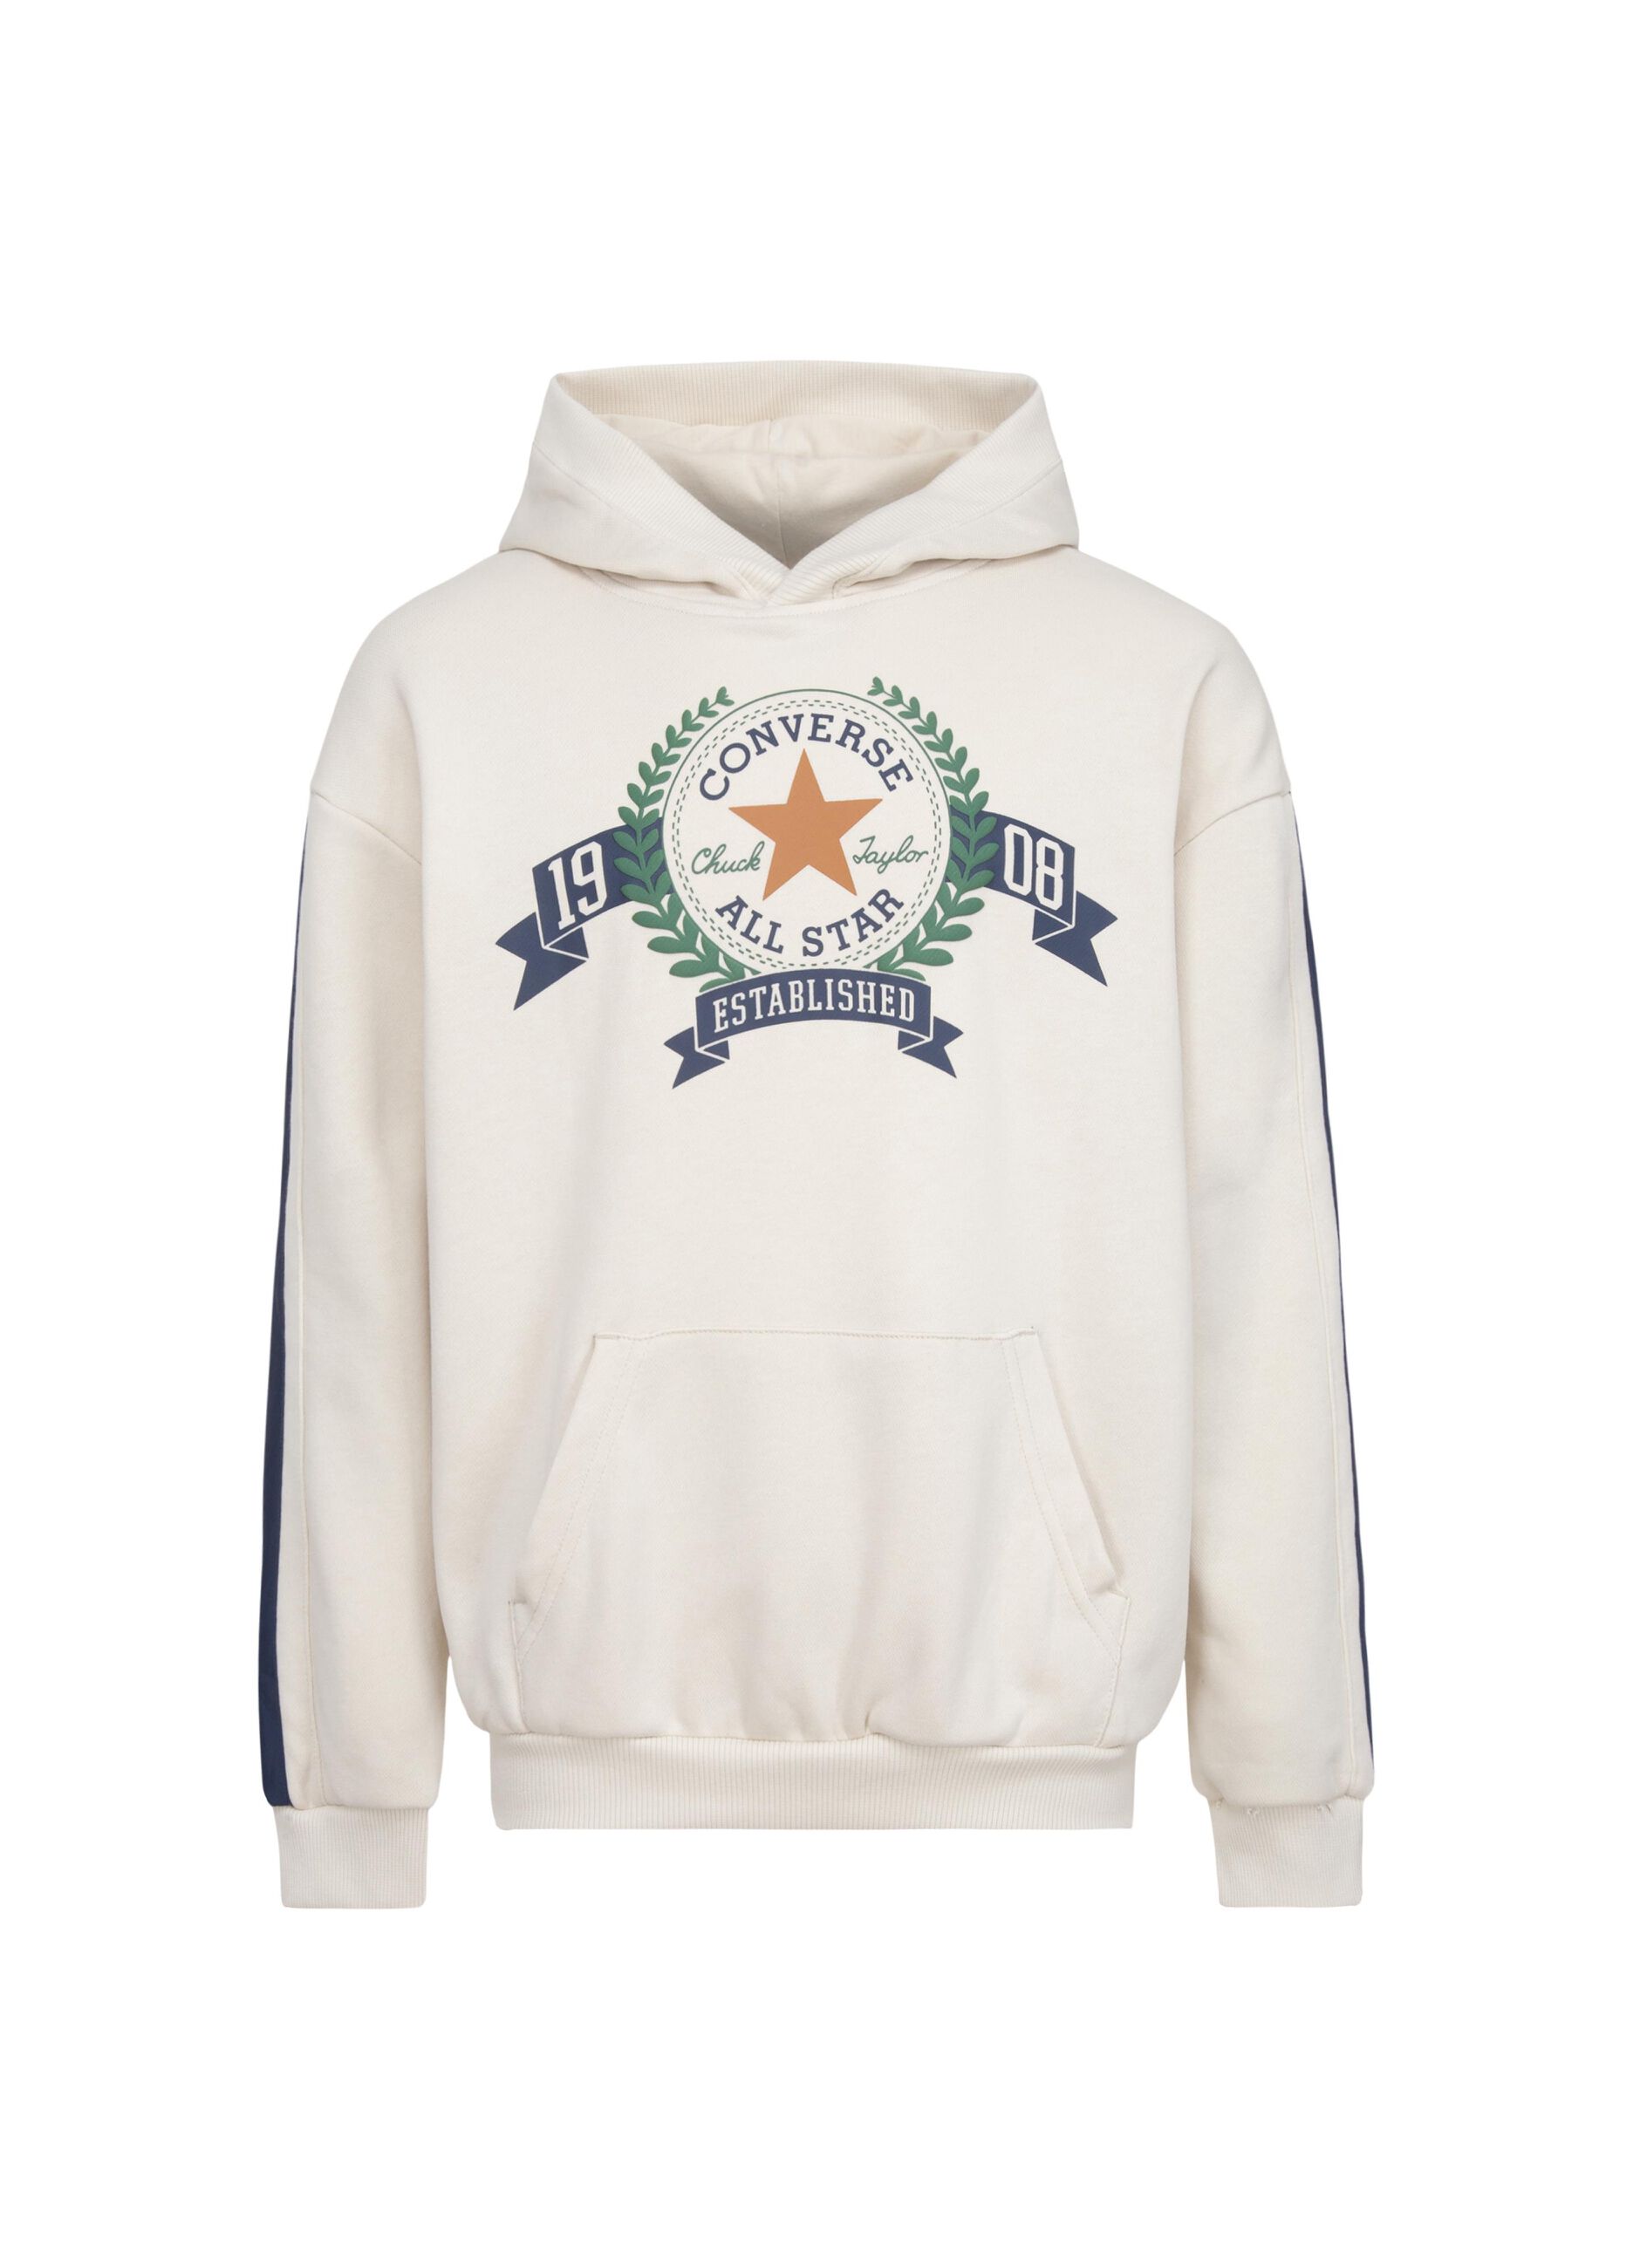 Sweatshirt with hood and Club logo print